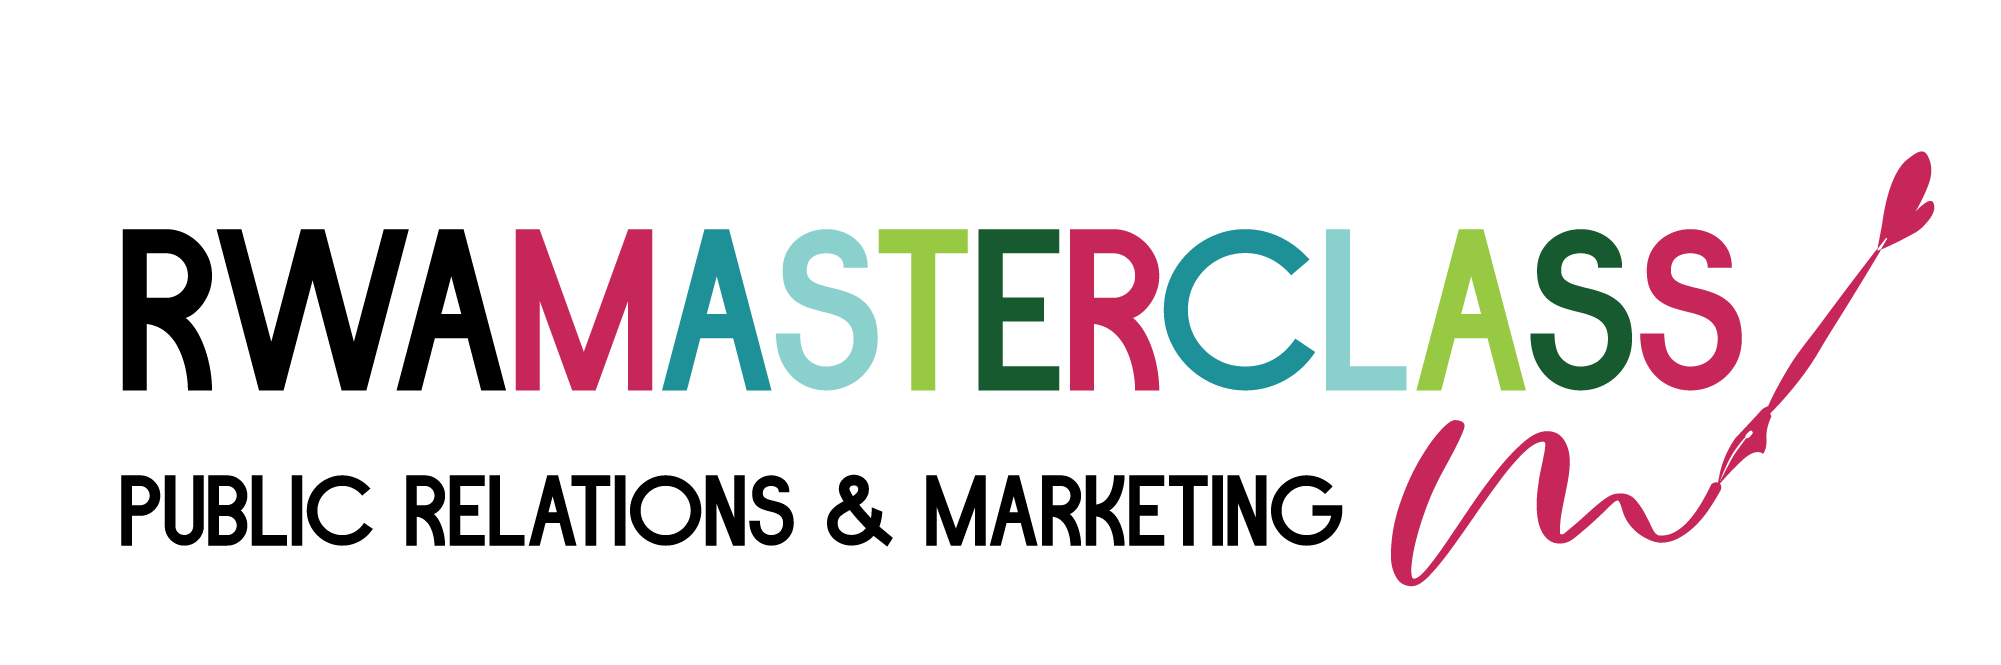 master class logo